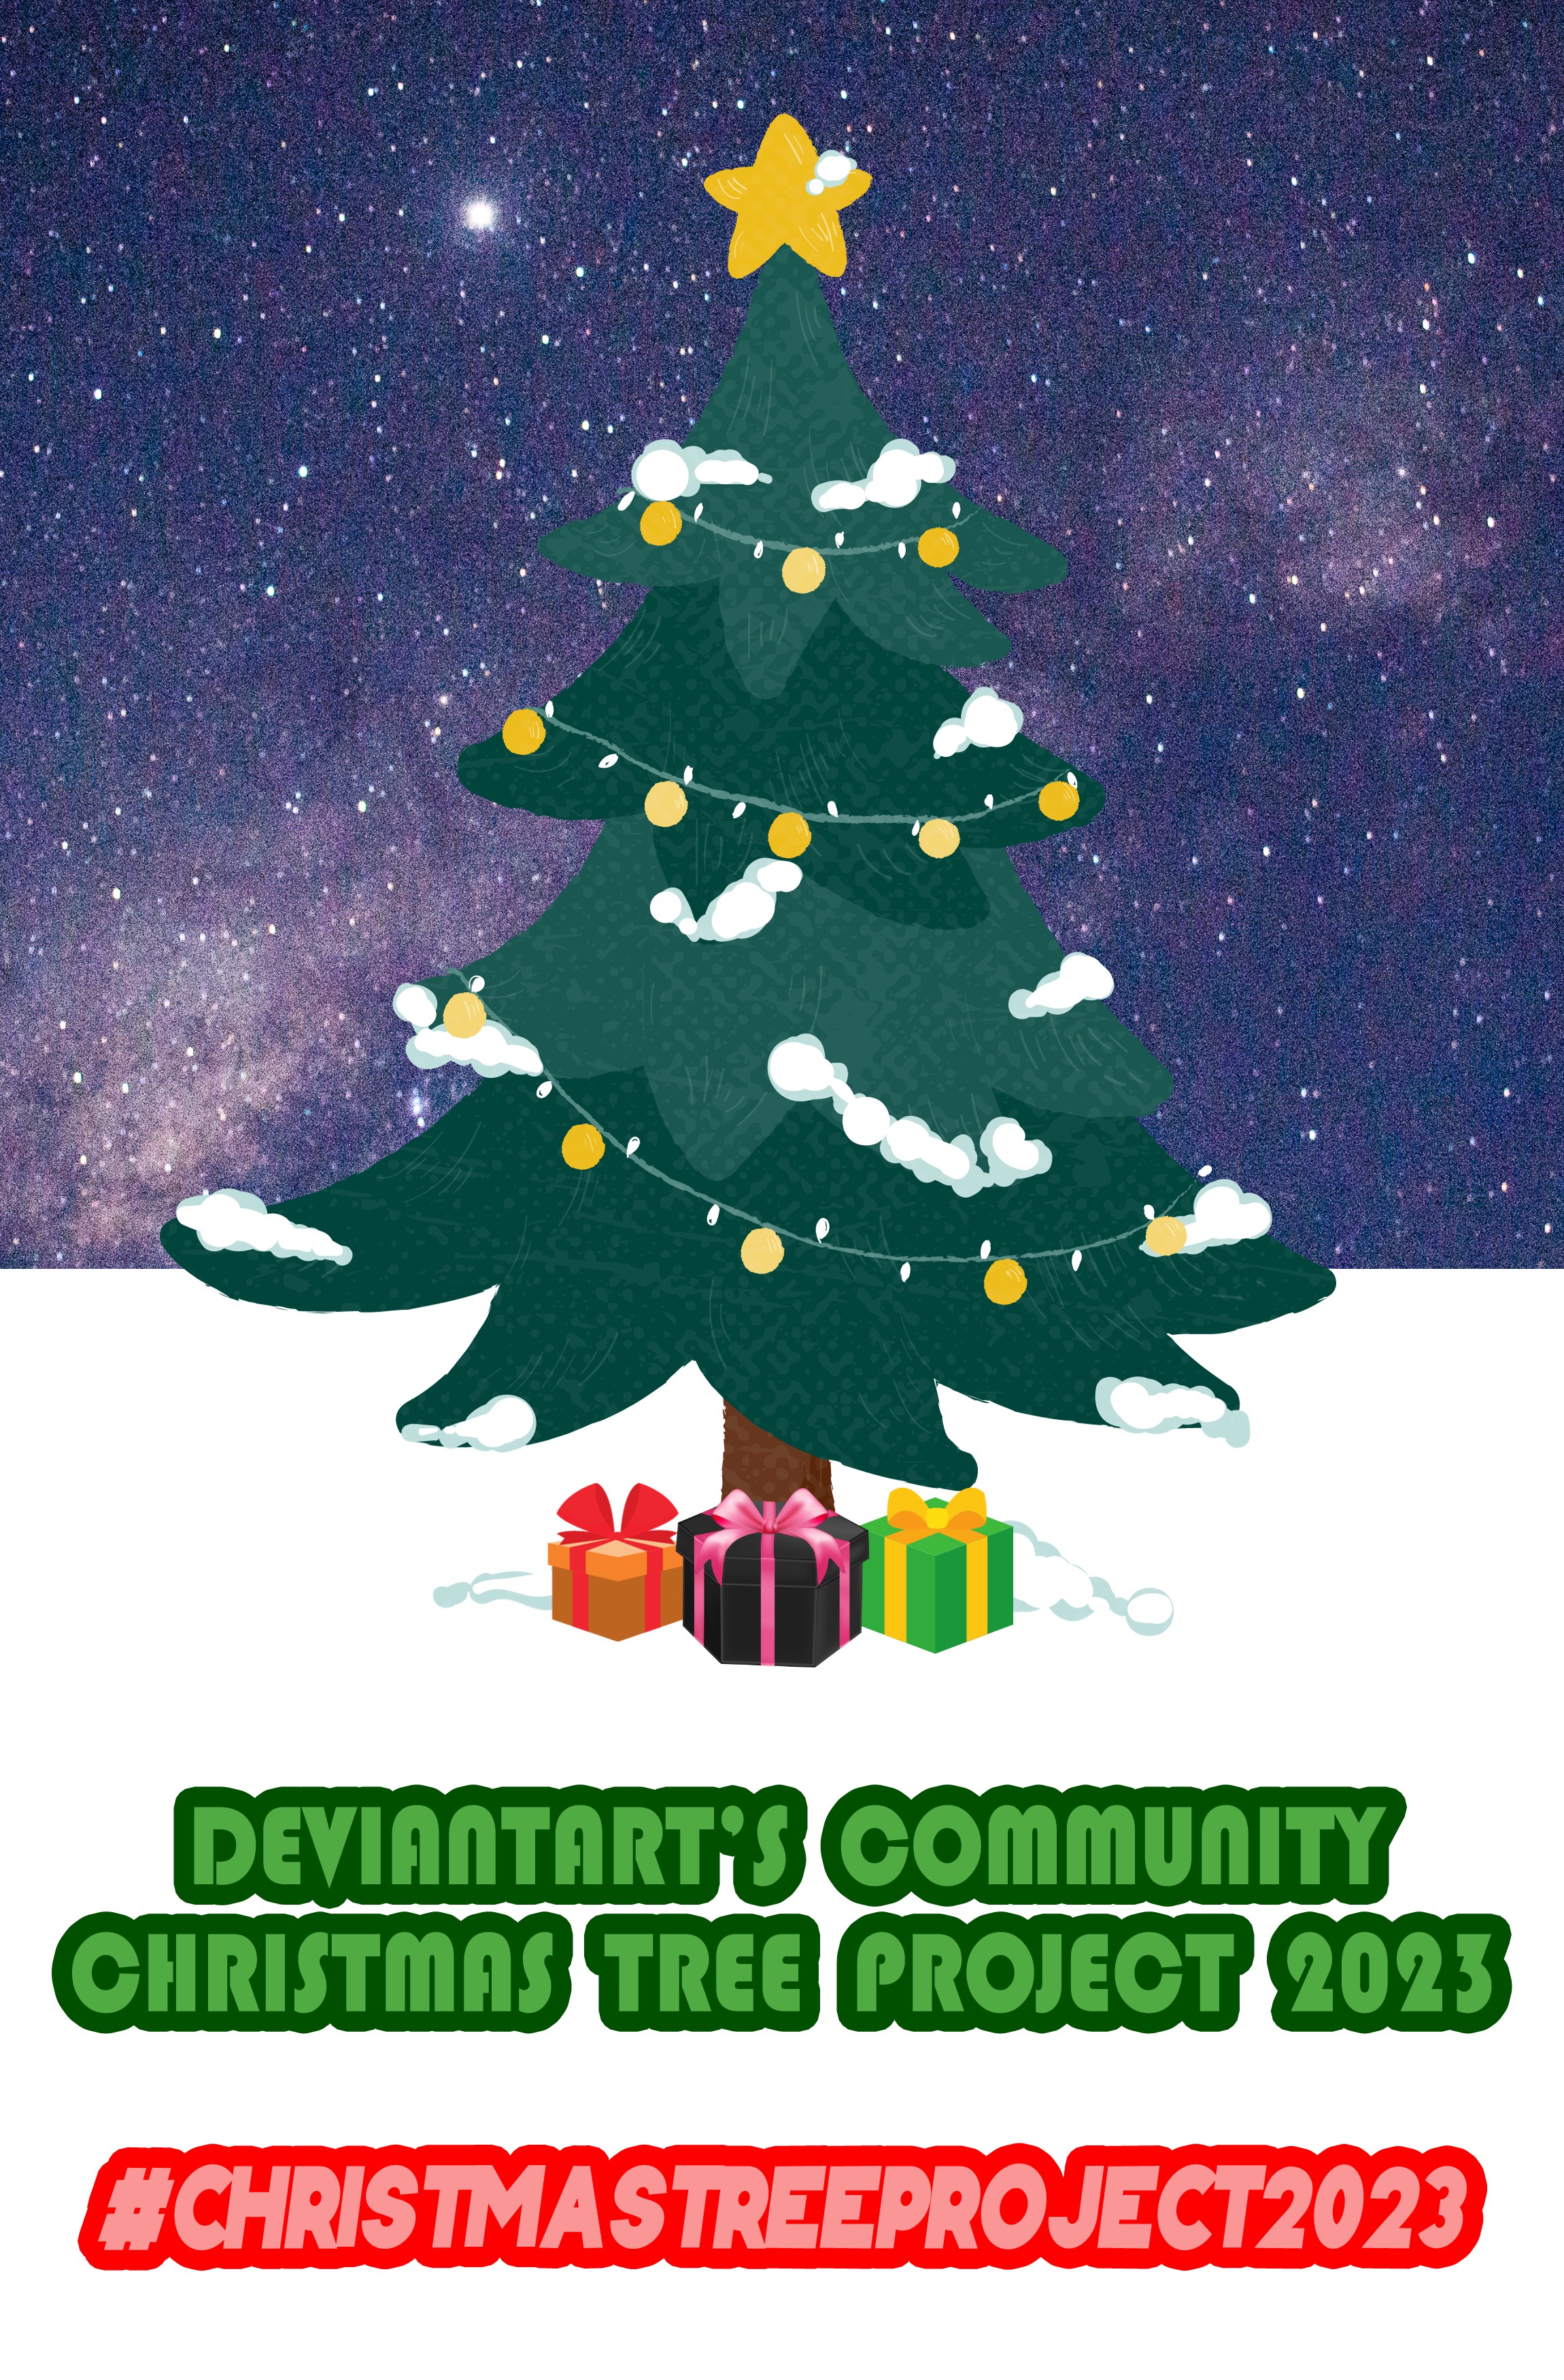 DeviantArt's Community Christmas Tree Project 2023